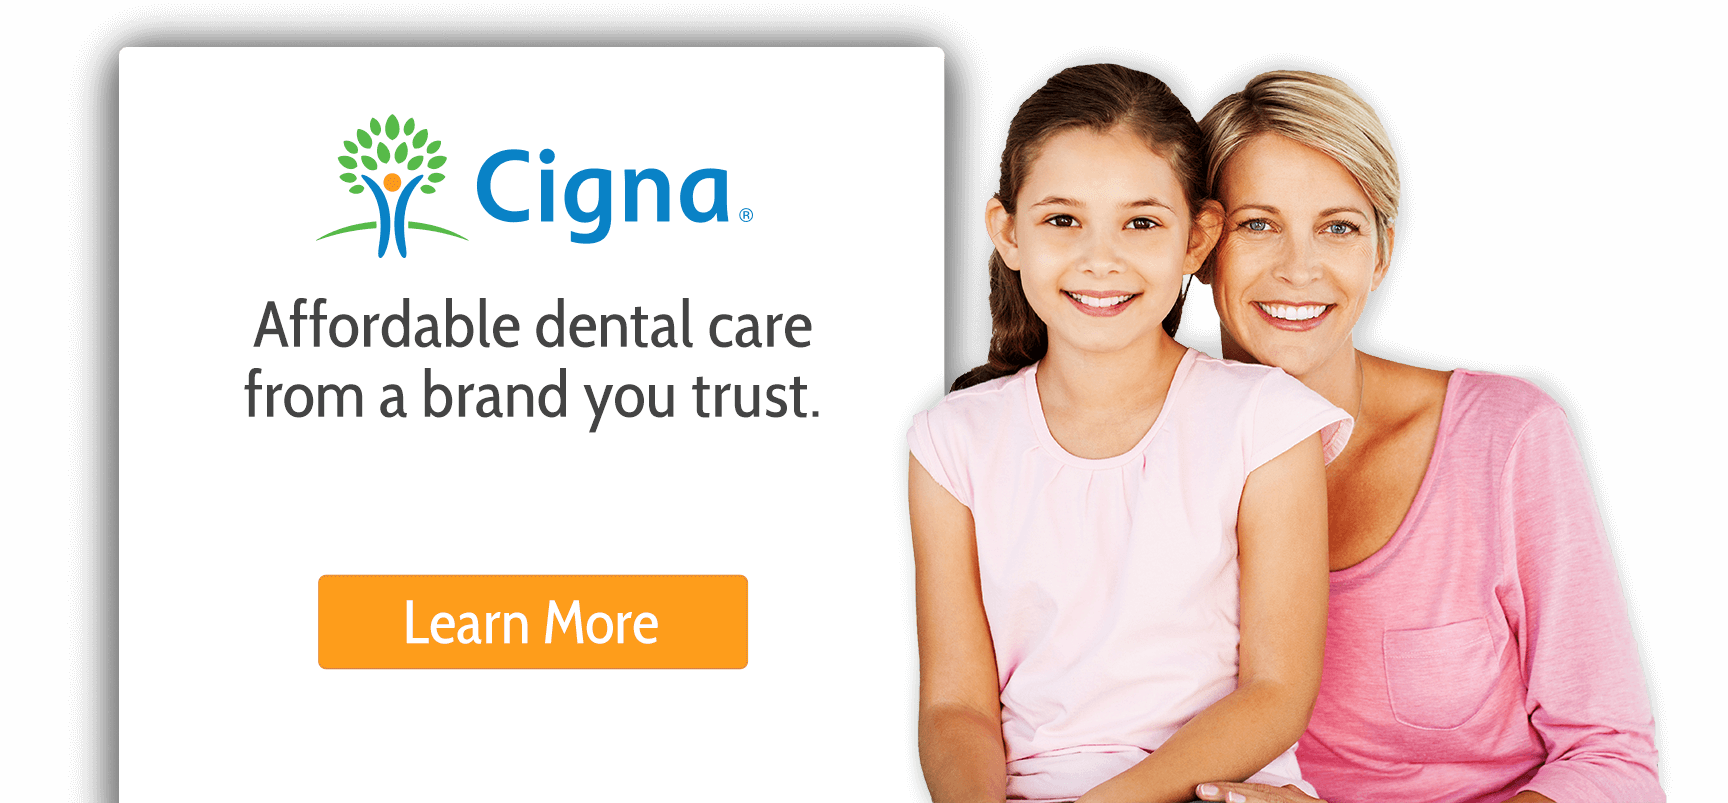 Cigna Dental Plans, a Dental Insurance Alternative | Join. Save. Smile